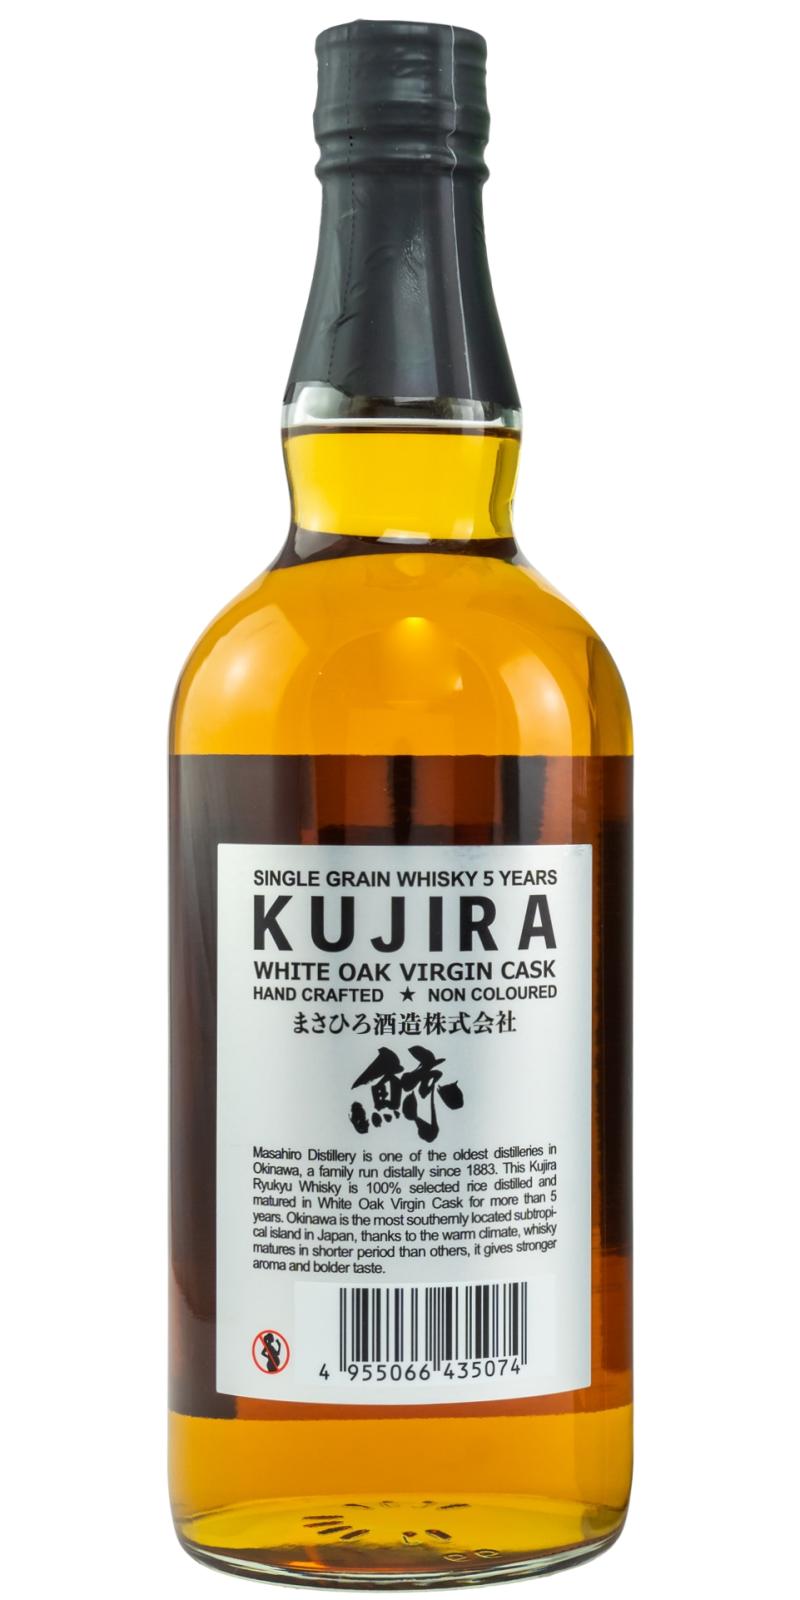 Kujira 05-year-old